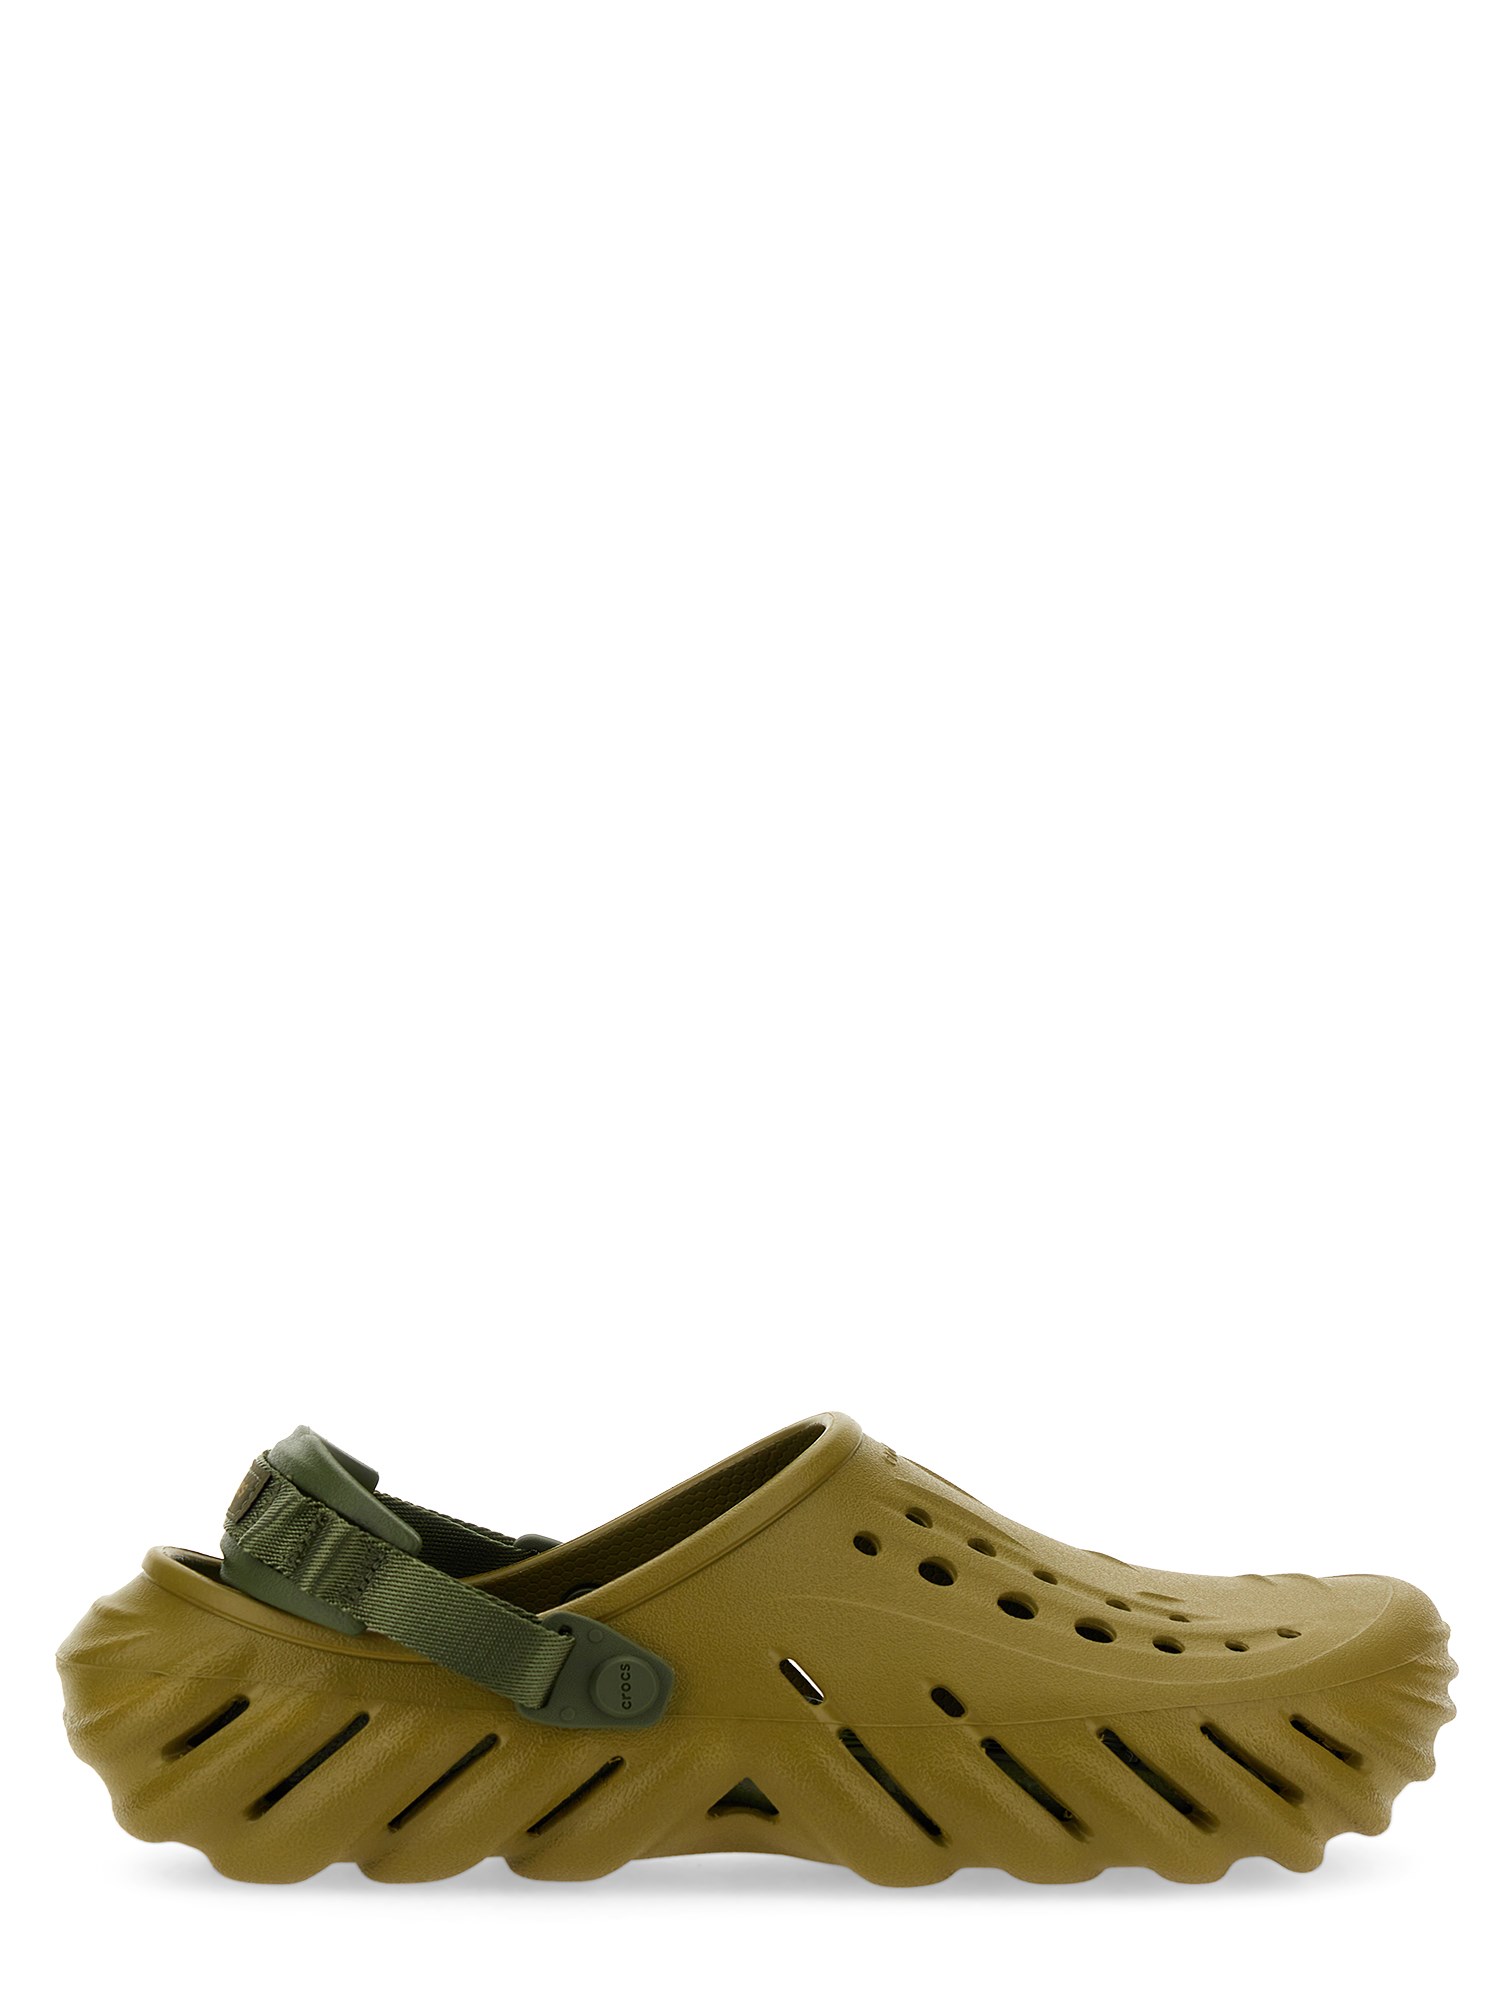 Crocs crocs "echo clog" sandal